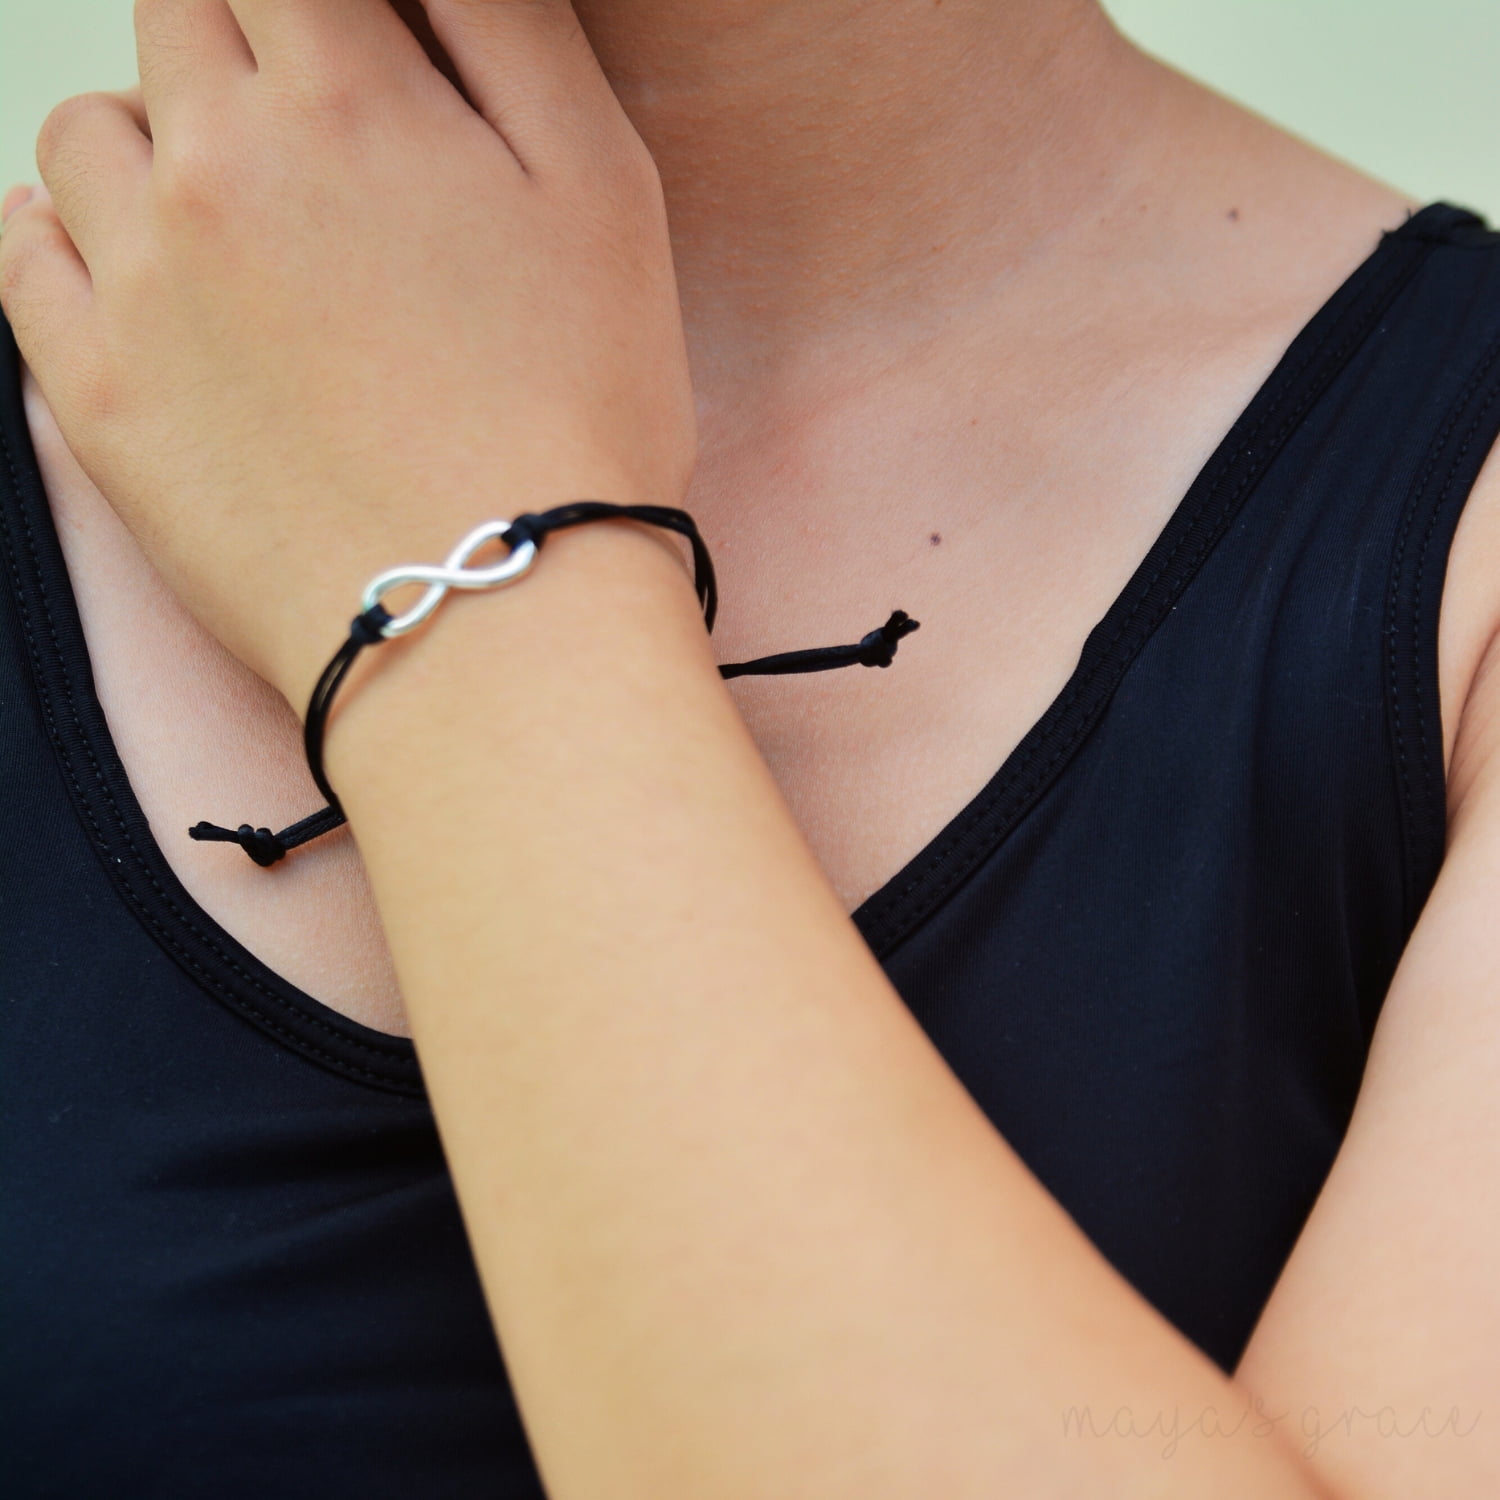 Link Bracelet - Infinity Love Woven Bracelets for Couples | eBay